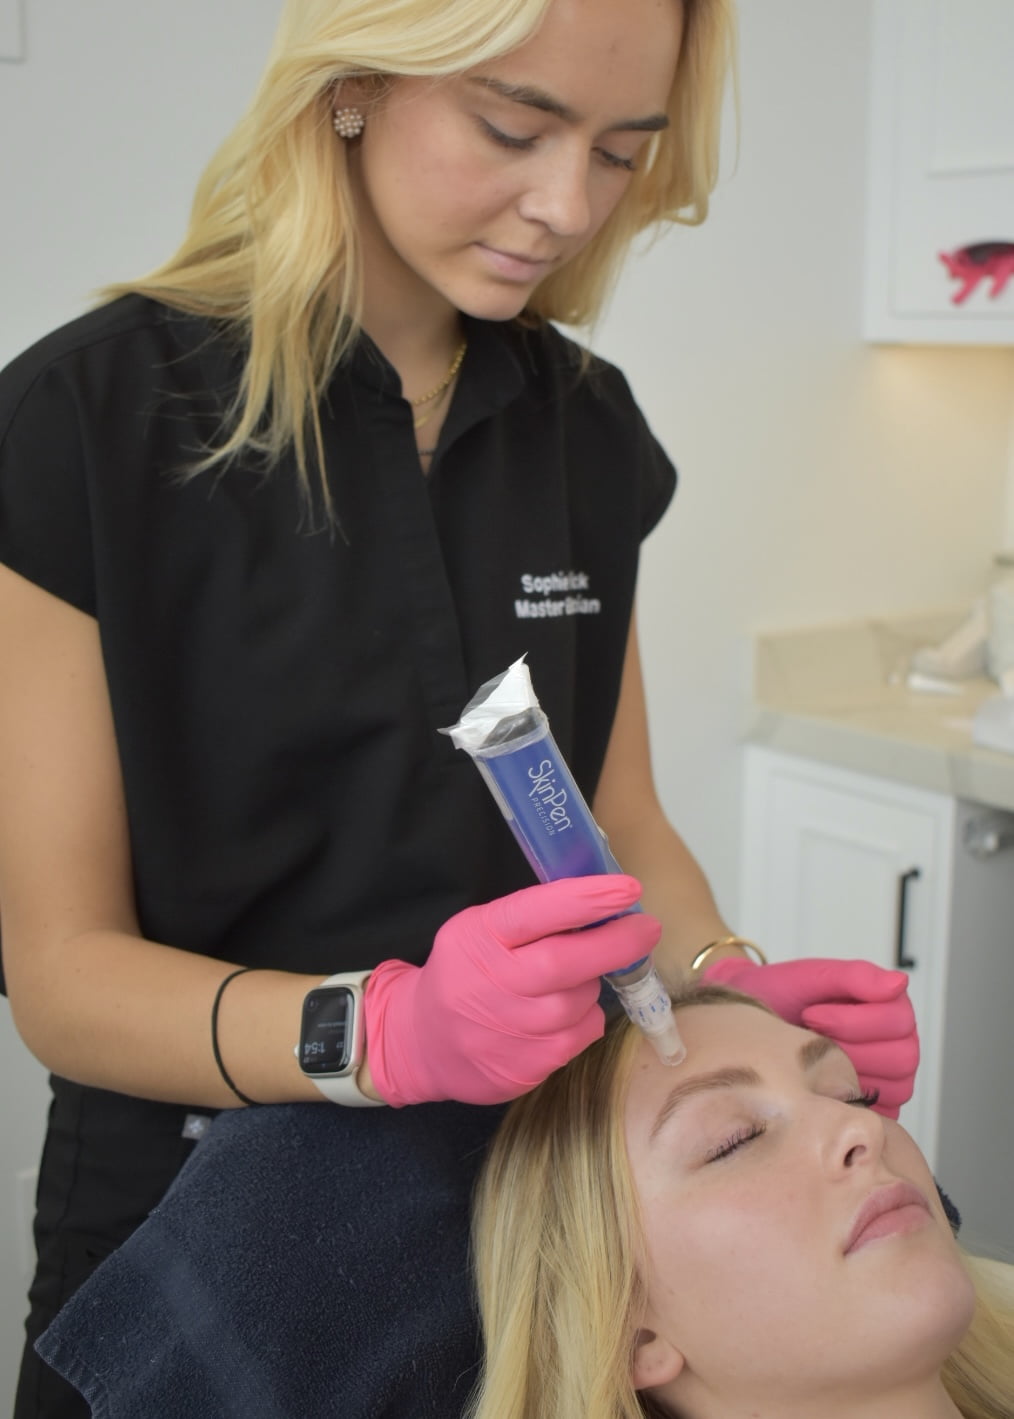 Woman Getting Microneedling Treatment from Beautician | Cosmedics MedSpa in Lehi, UT